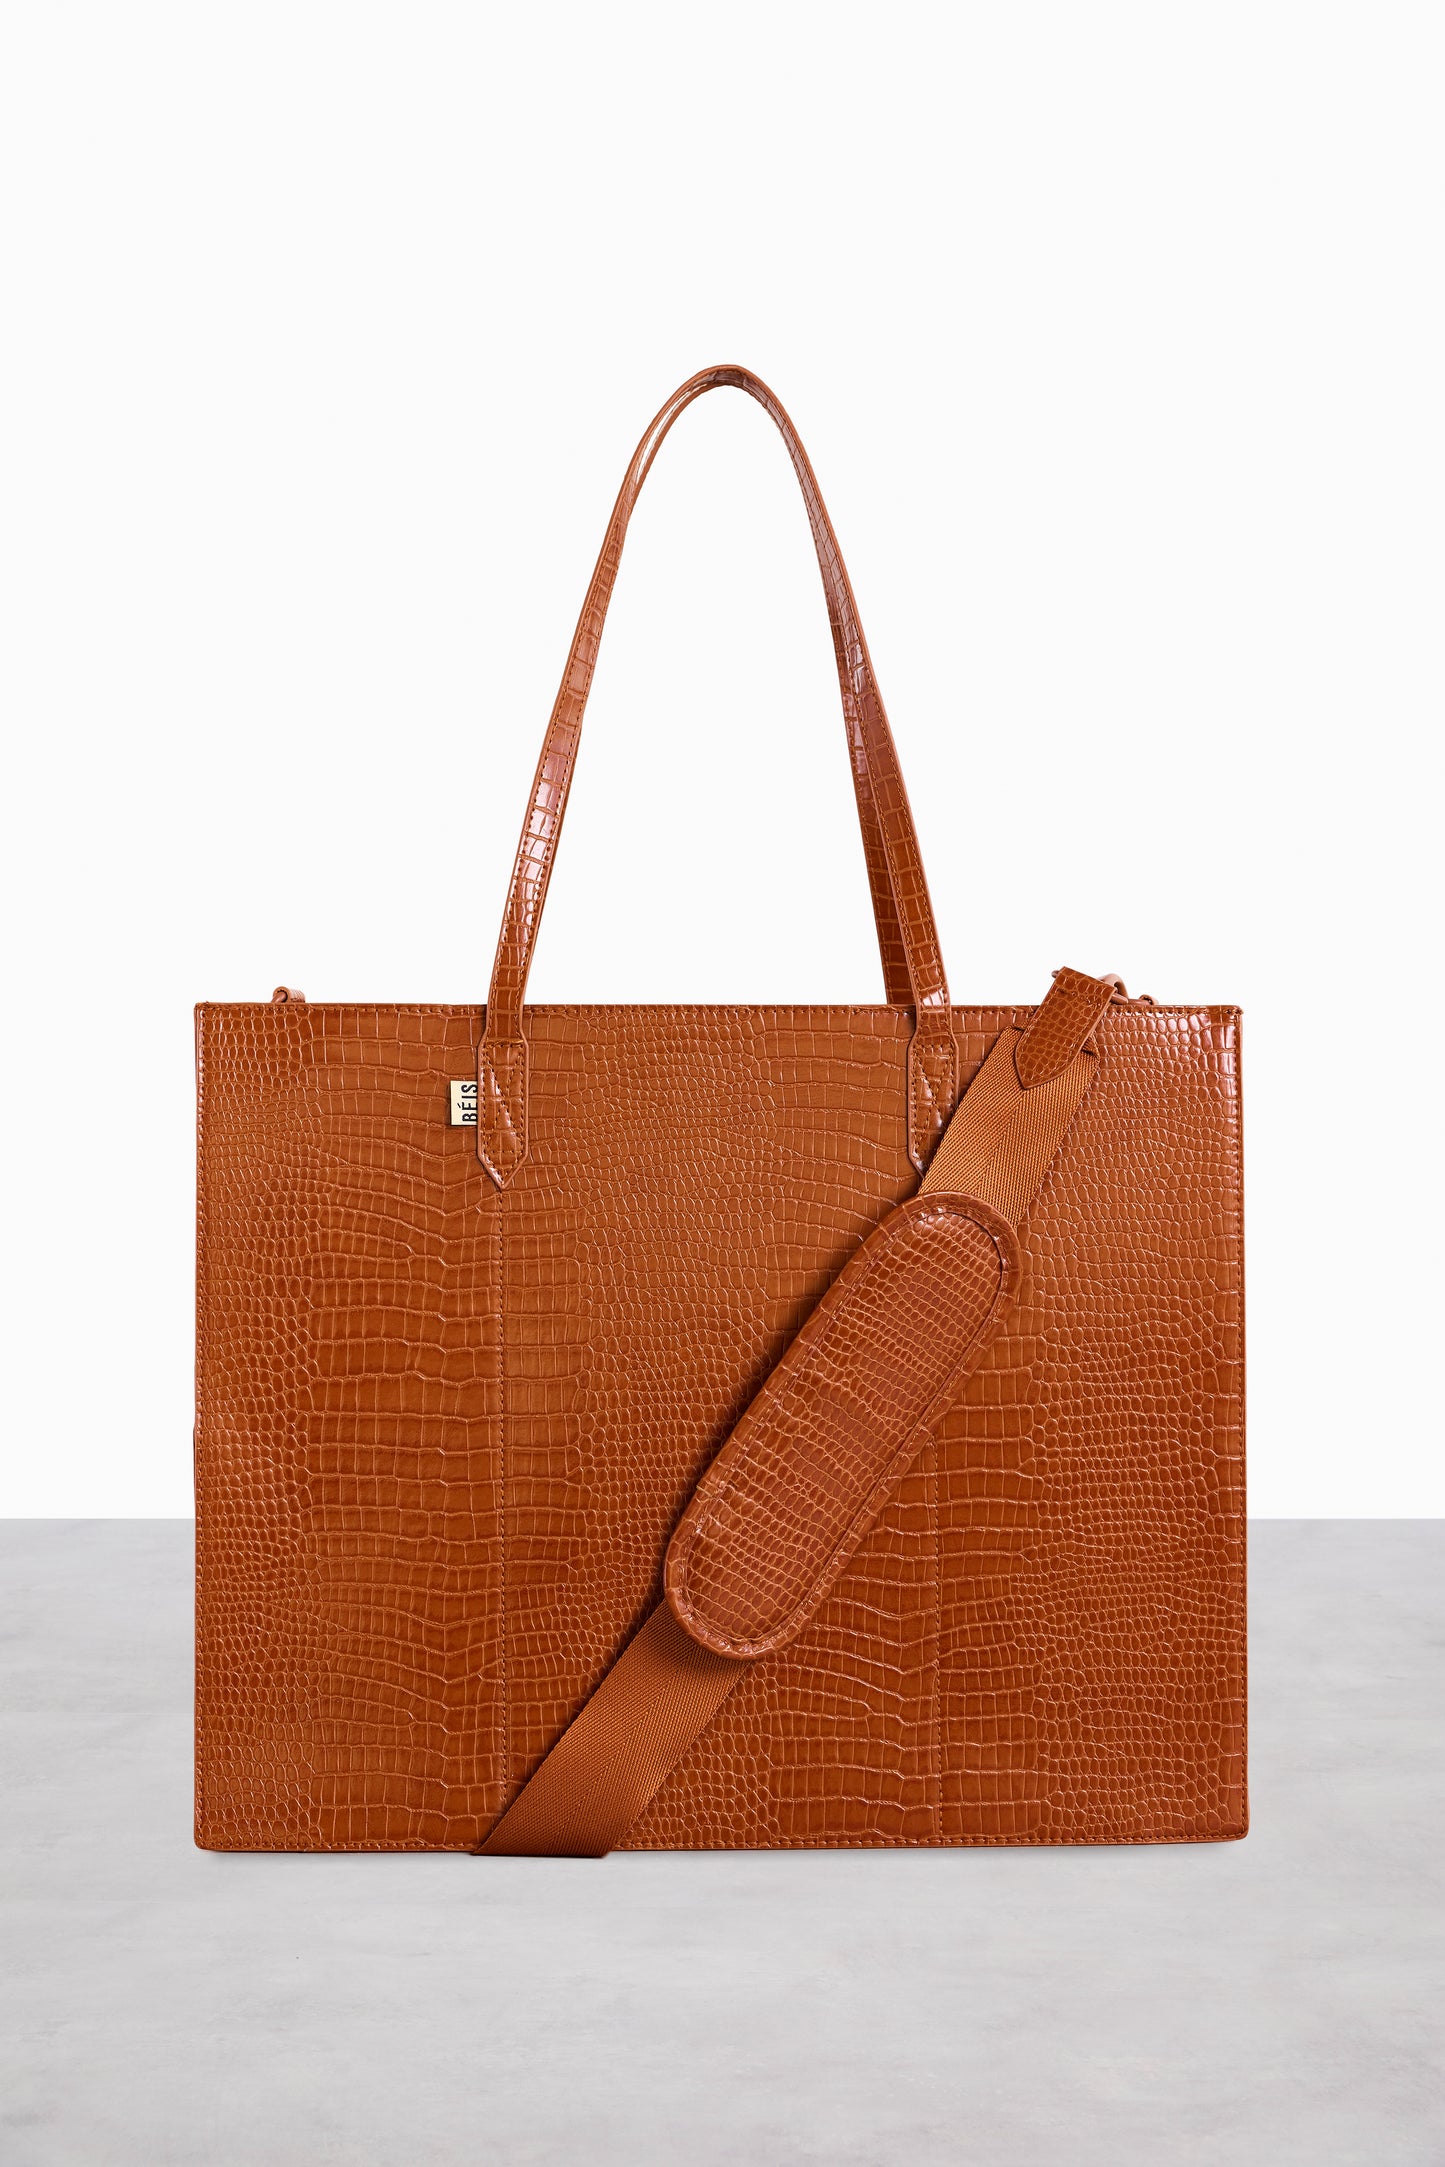 Huge Bag, Cognac Brown Oversized Bag, Tall Brown Leather Tote Bag